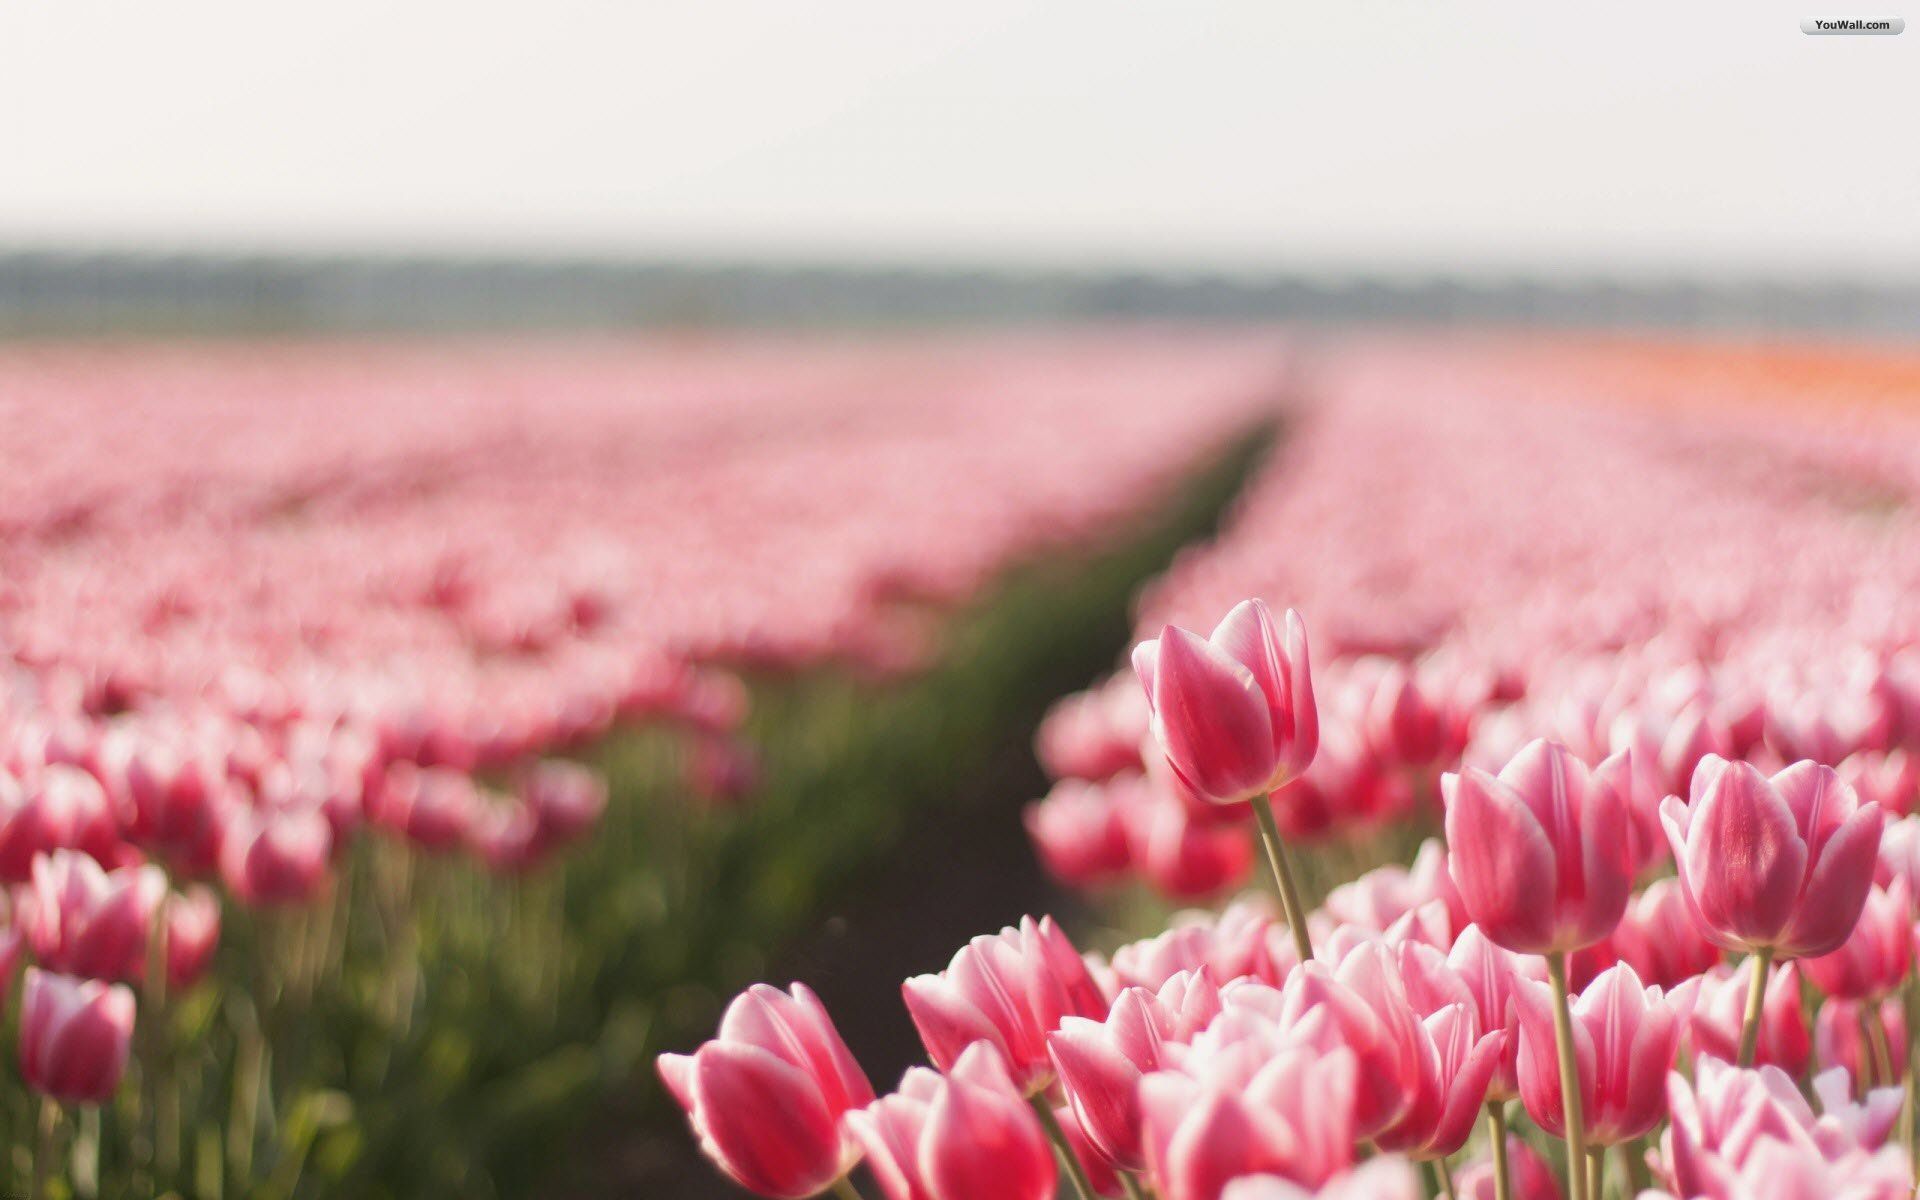 YouWall - Pink Tulips Field Wallpaper - wallpaper,wallpapers,free ...